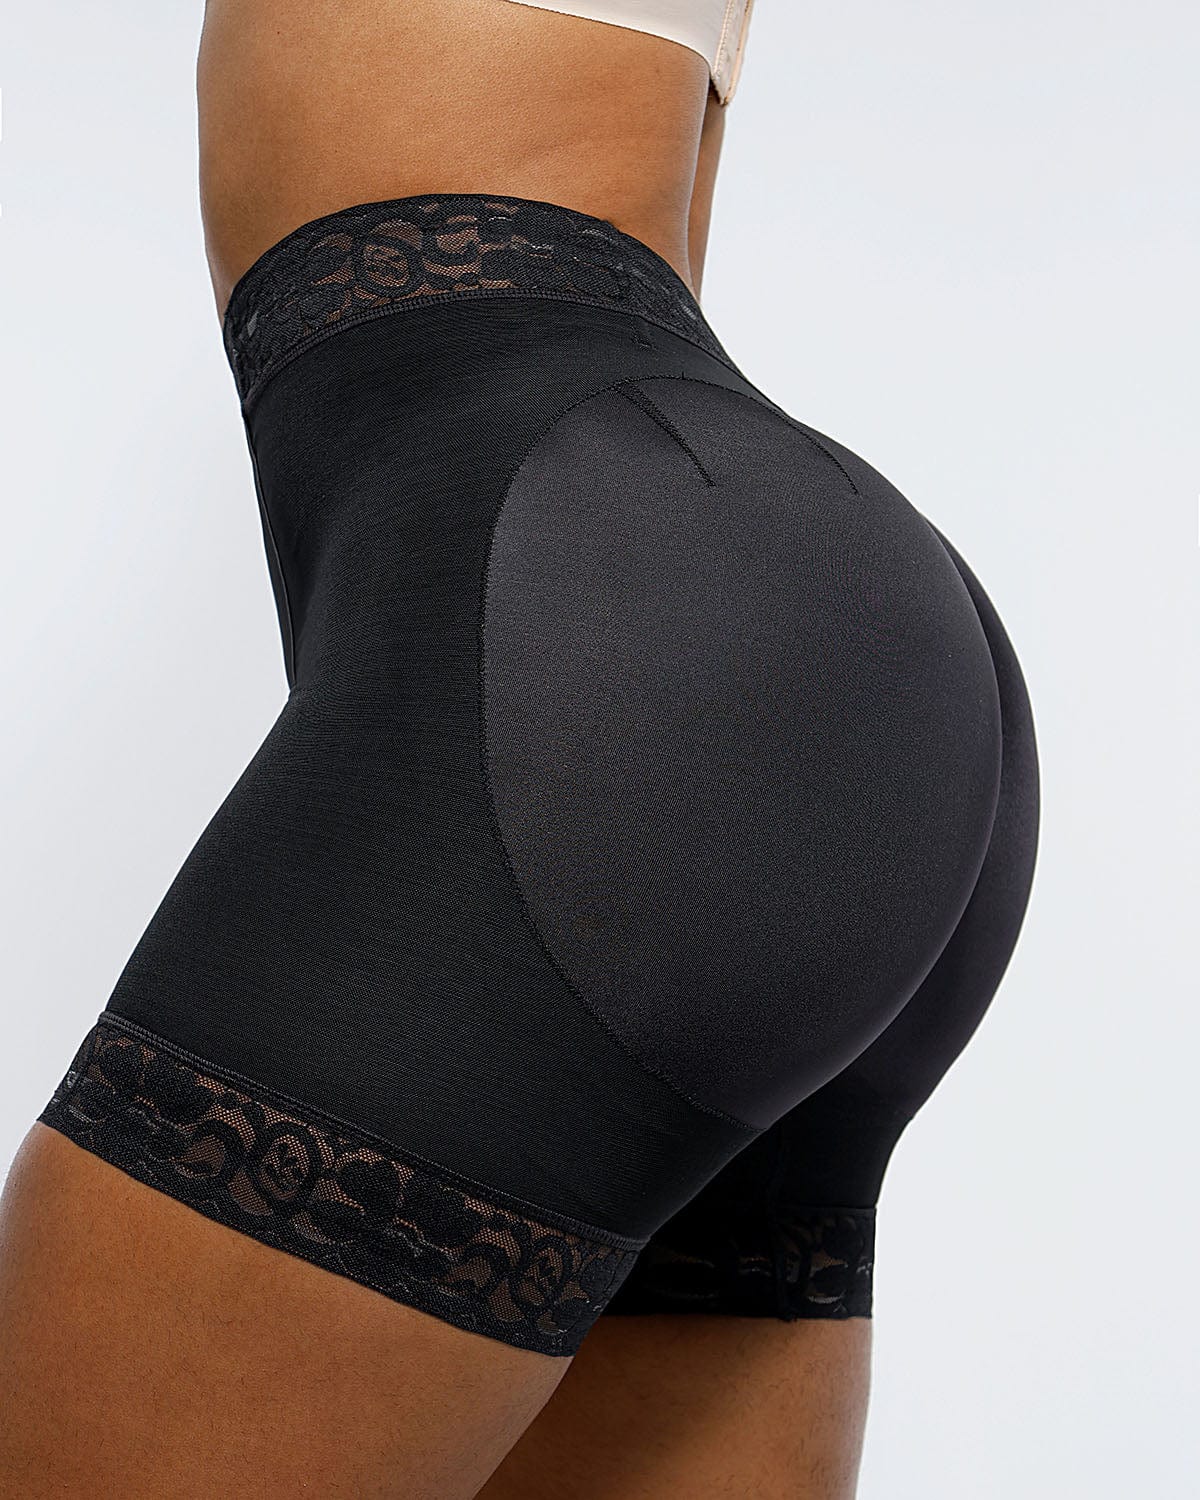 AirSlim® Mid Waist Lace Butt Enhancer Panty